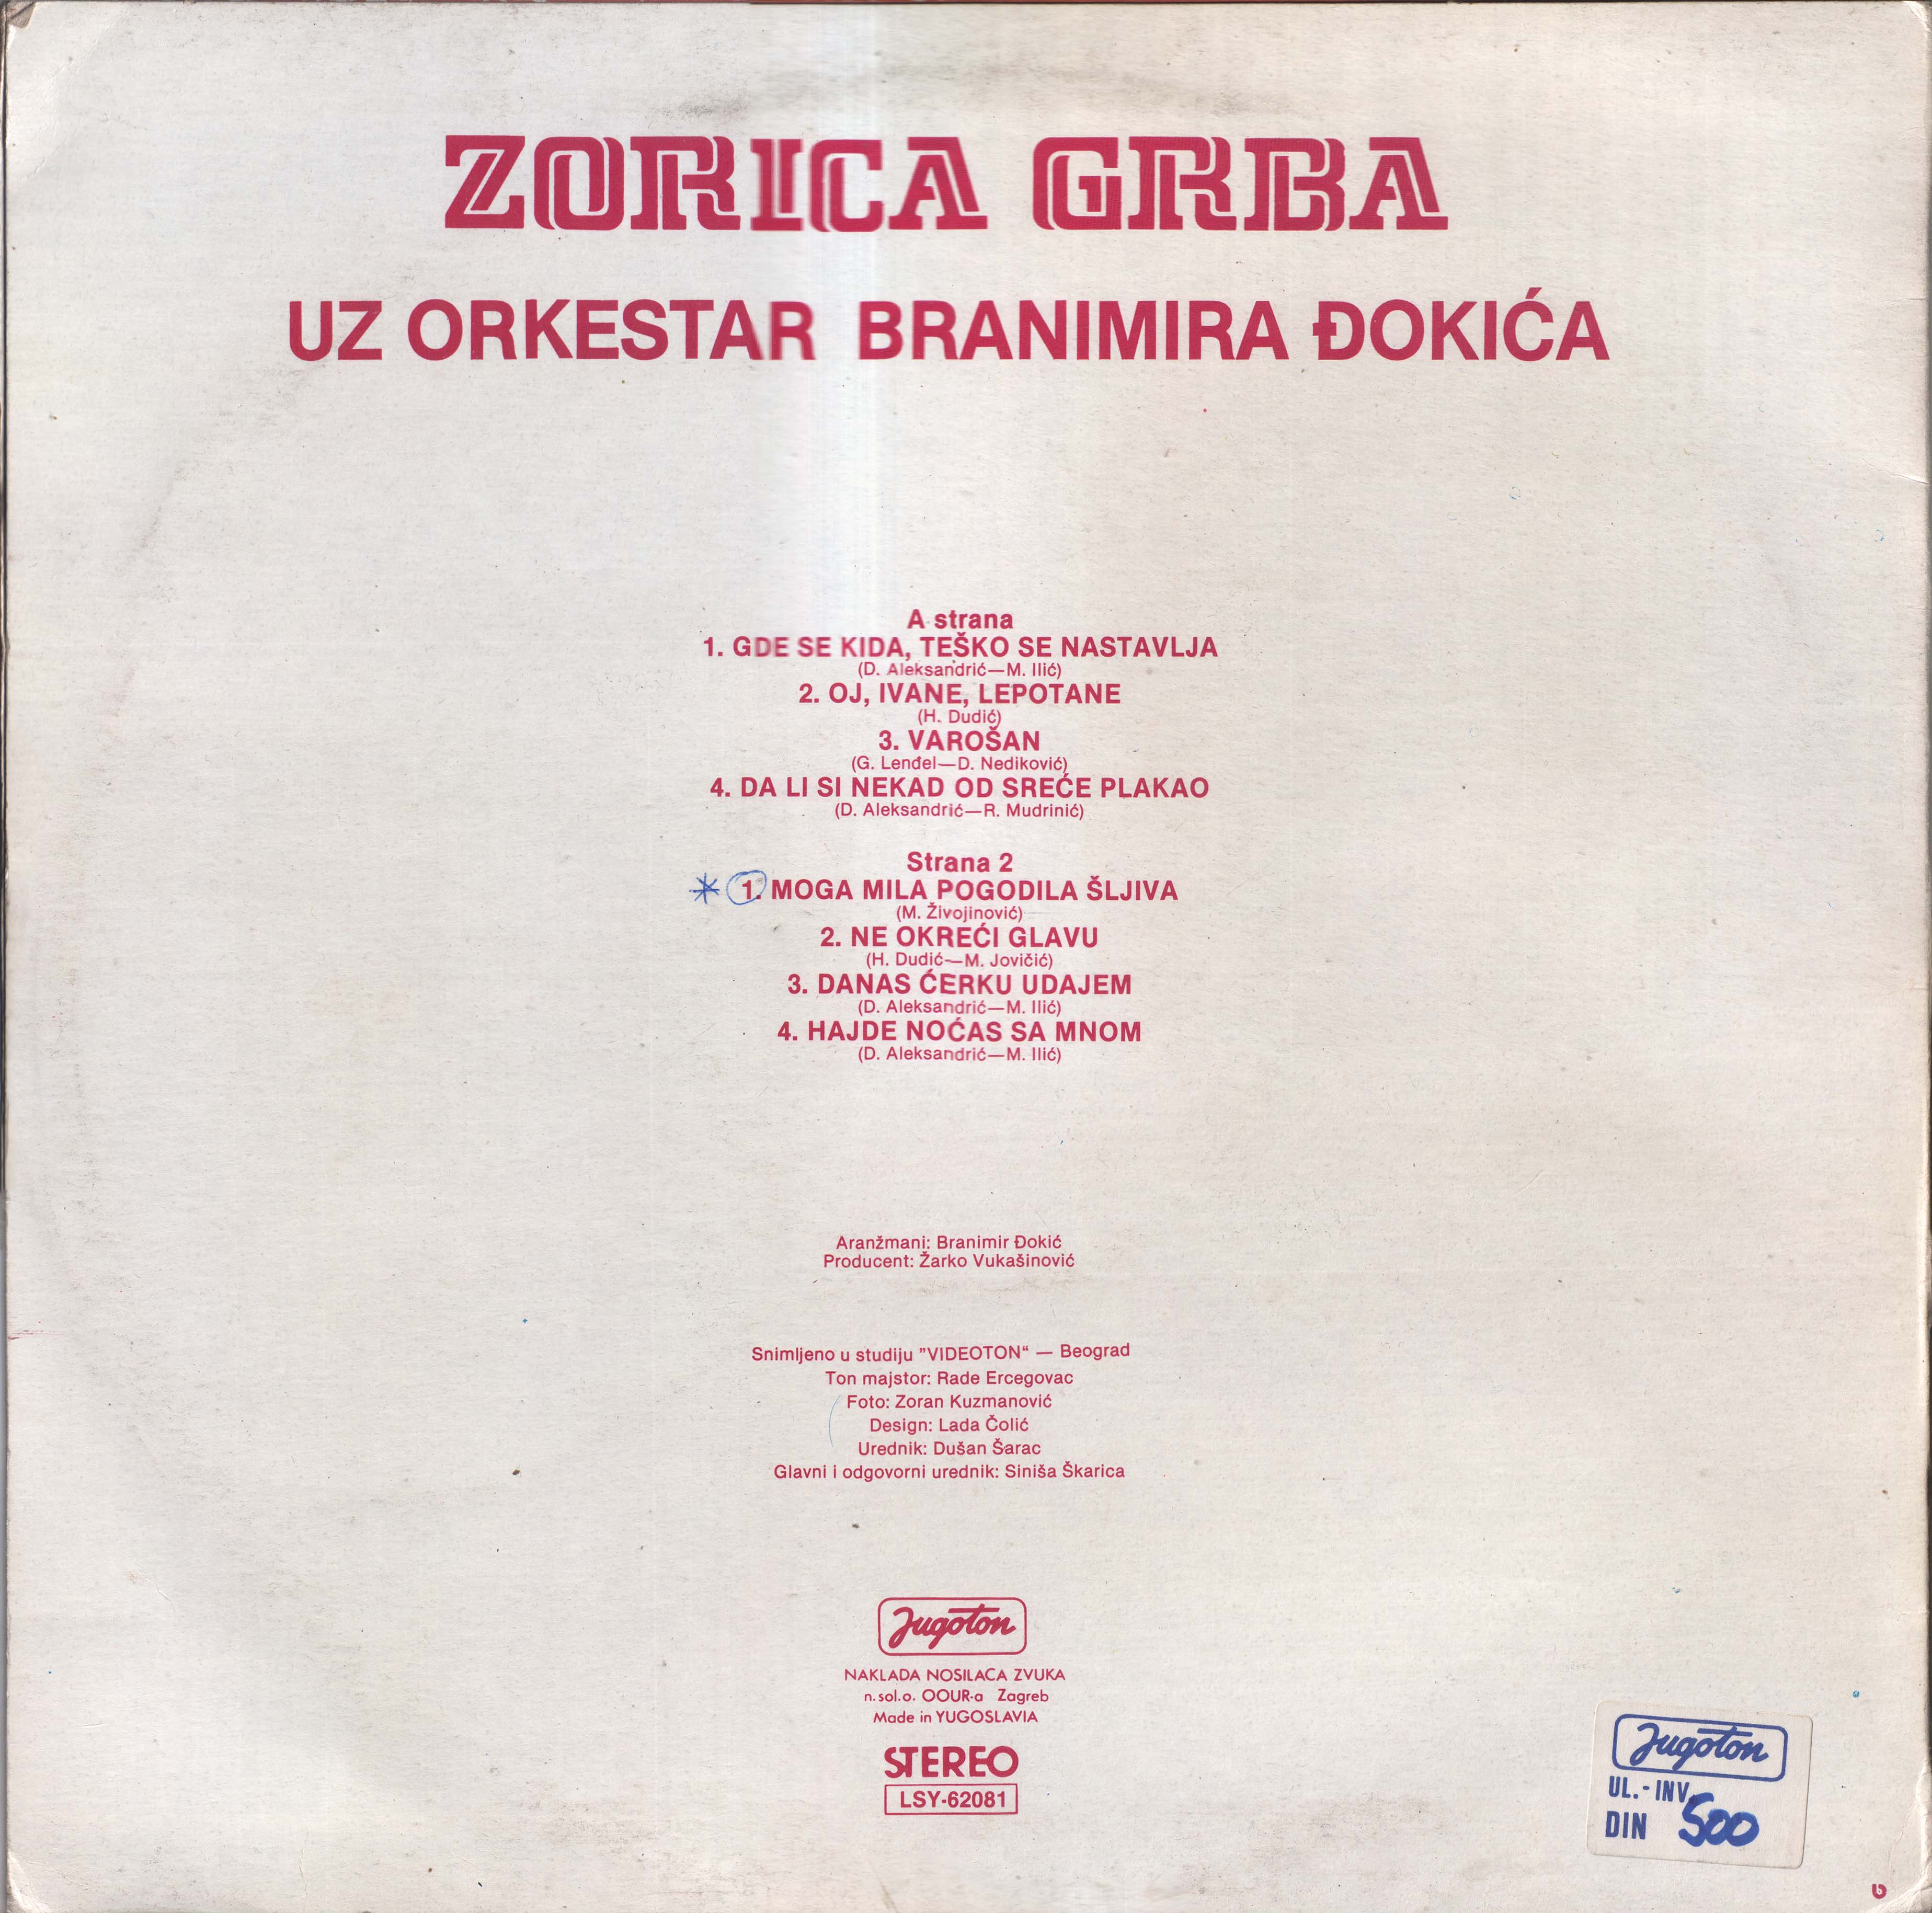 Zorica Grba 1986 Z